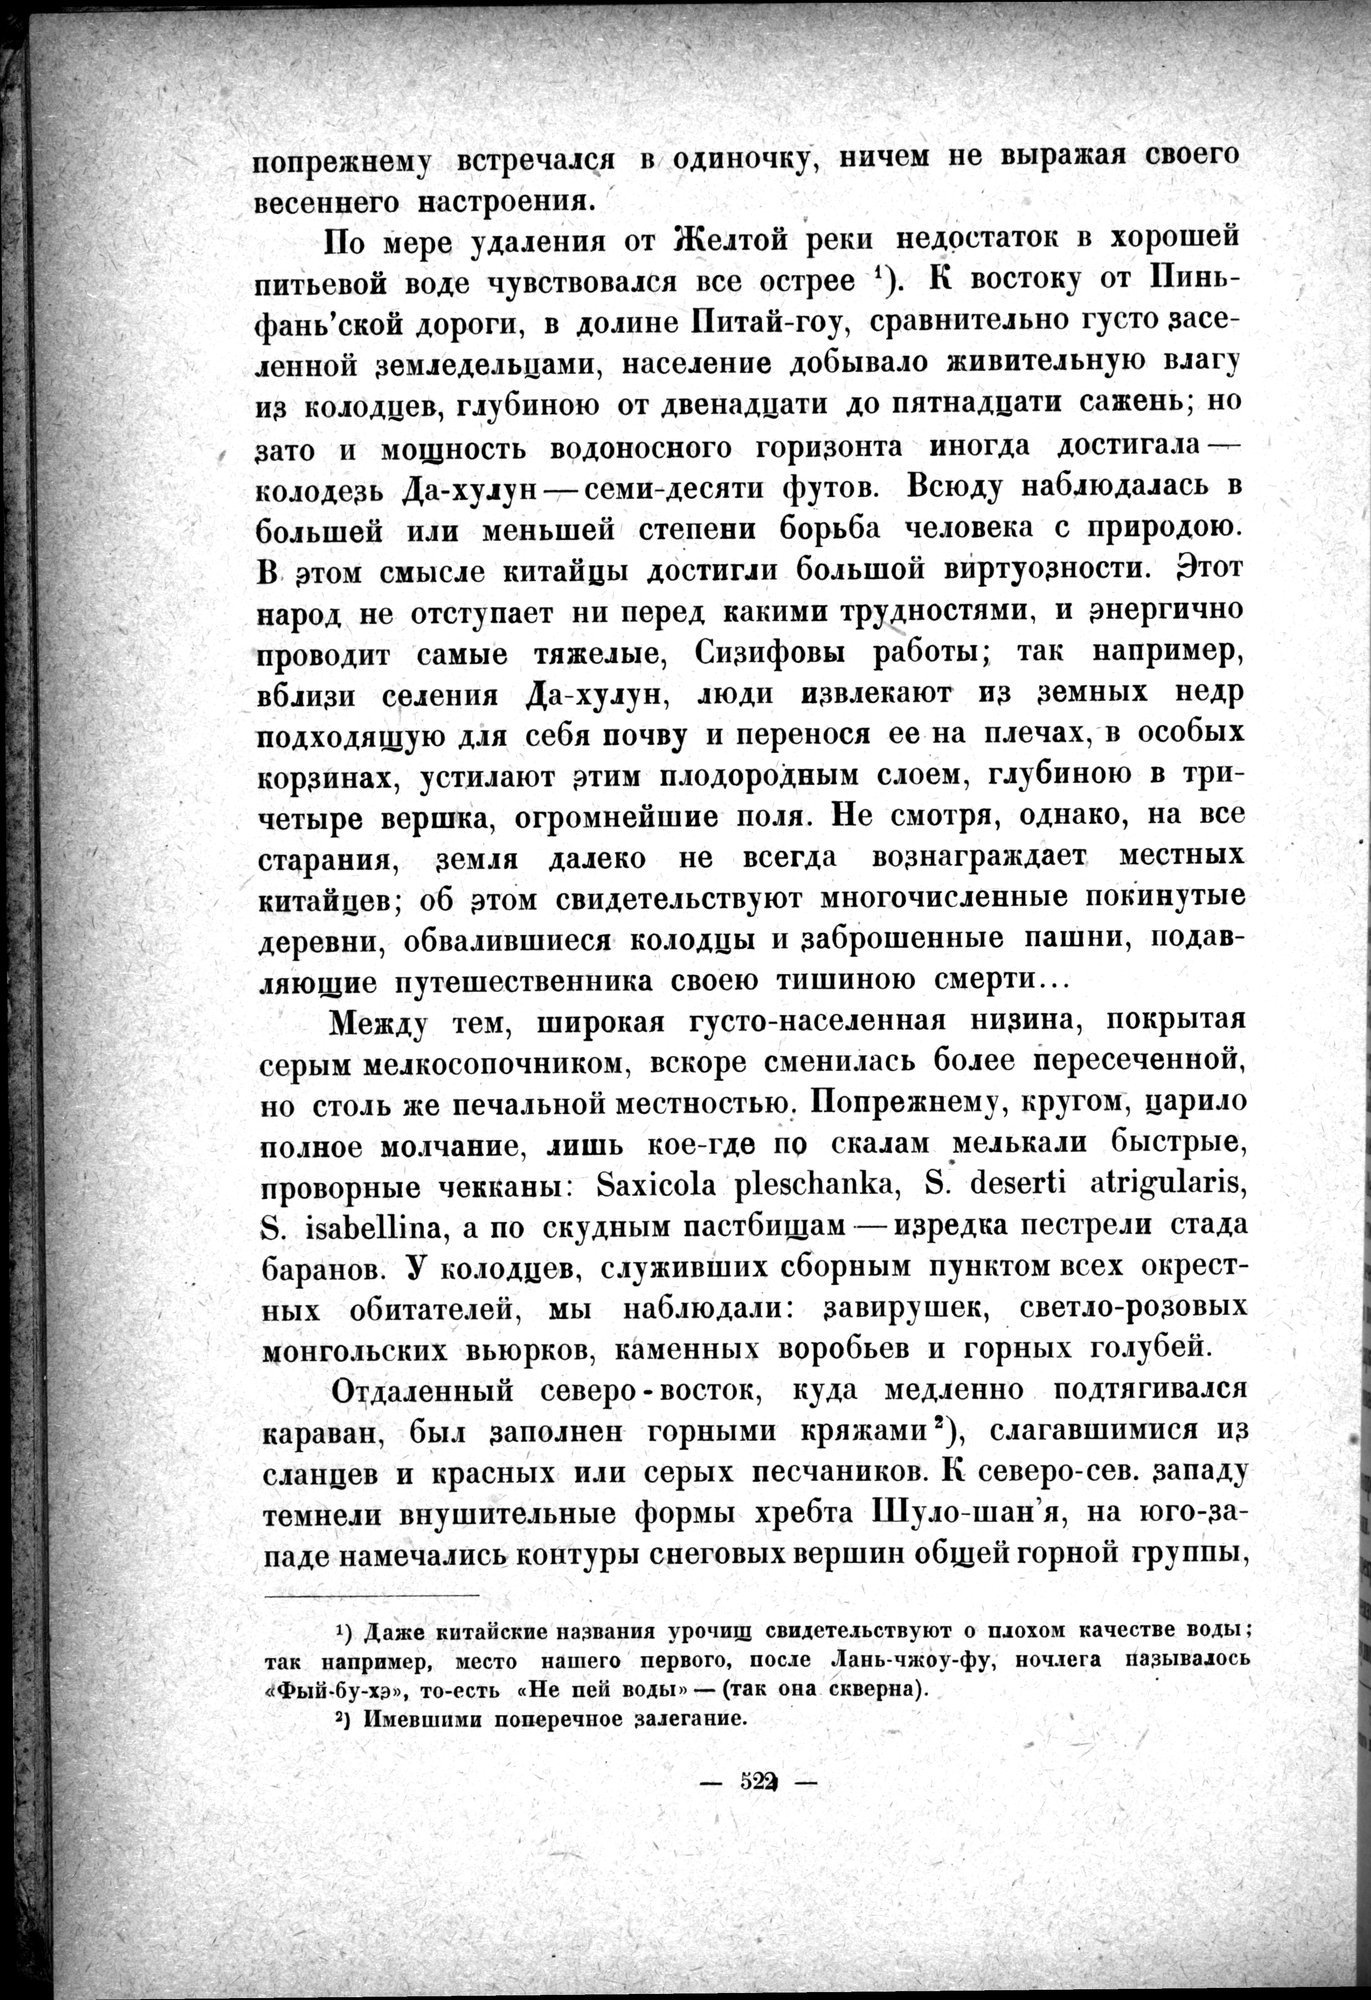 Mongoliya i Amdo i mertby gorod Khara-Khoto : vol.1 / Page 606 (Grayscale High Resolution Image)